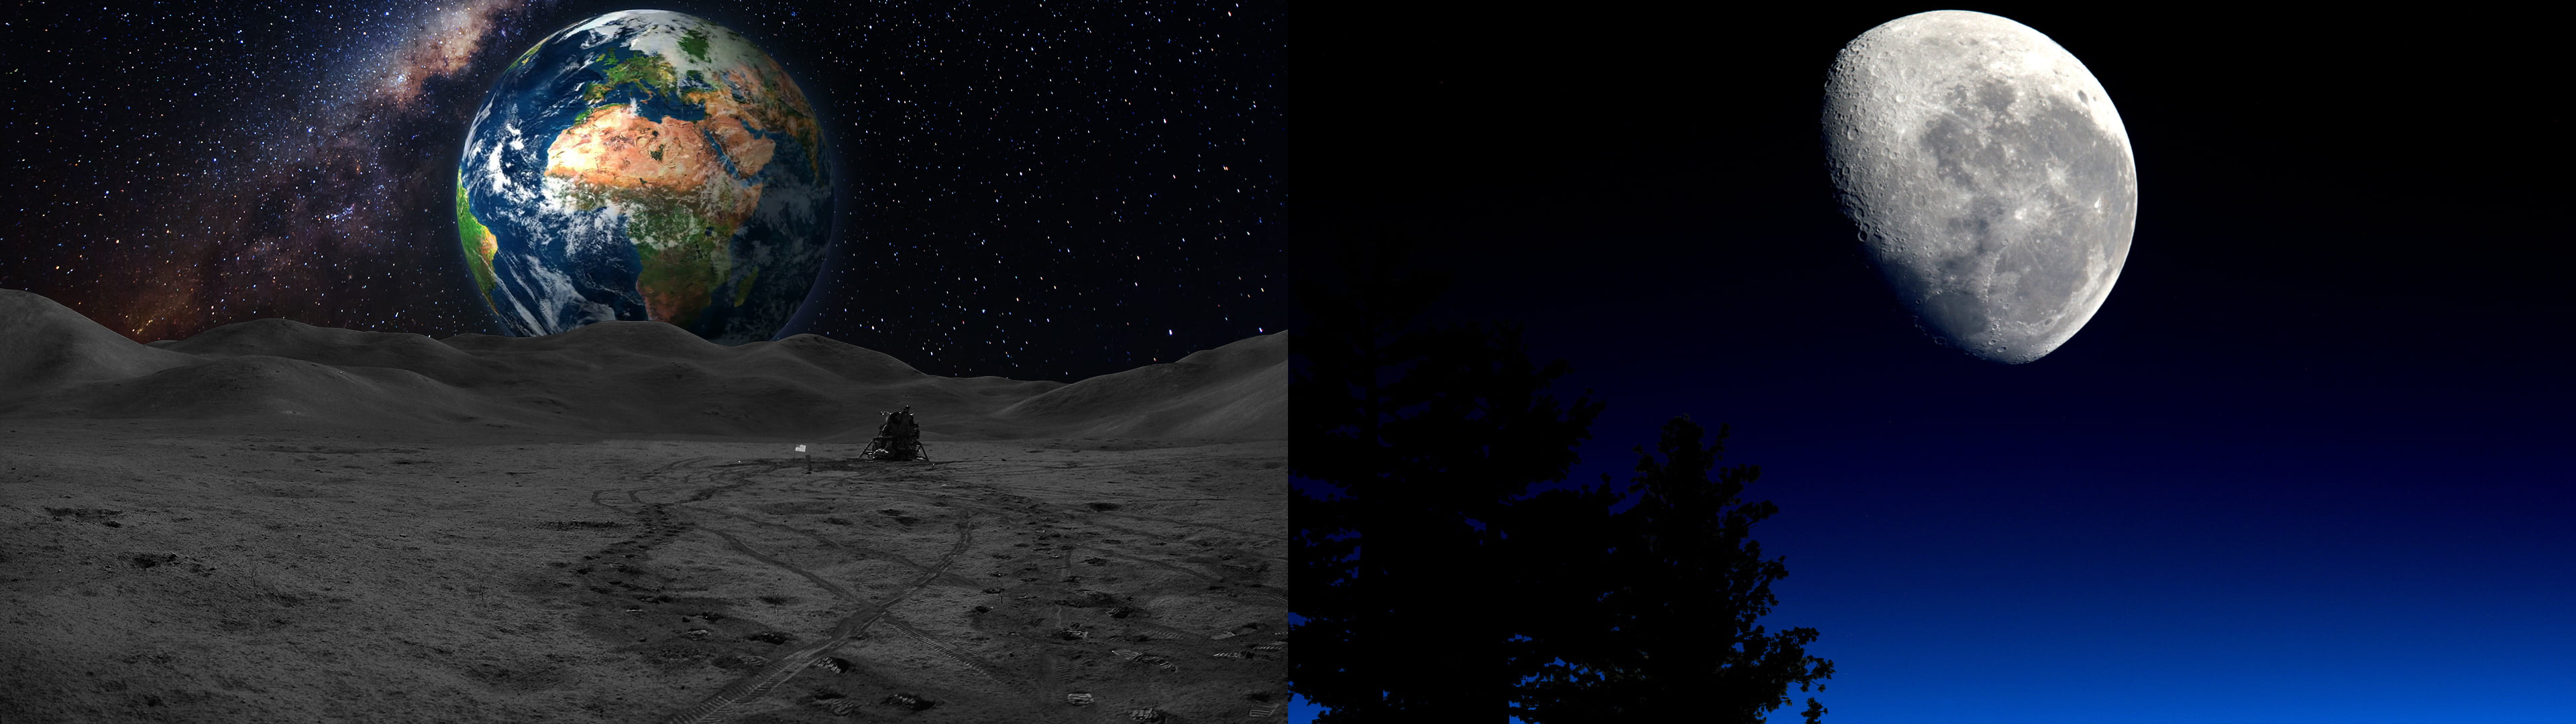 dual monitors, Moon, Earth, space, sky, astronomy, panoramic